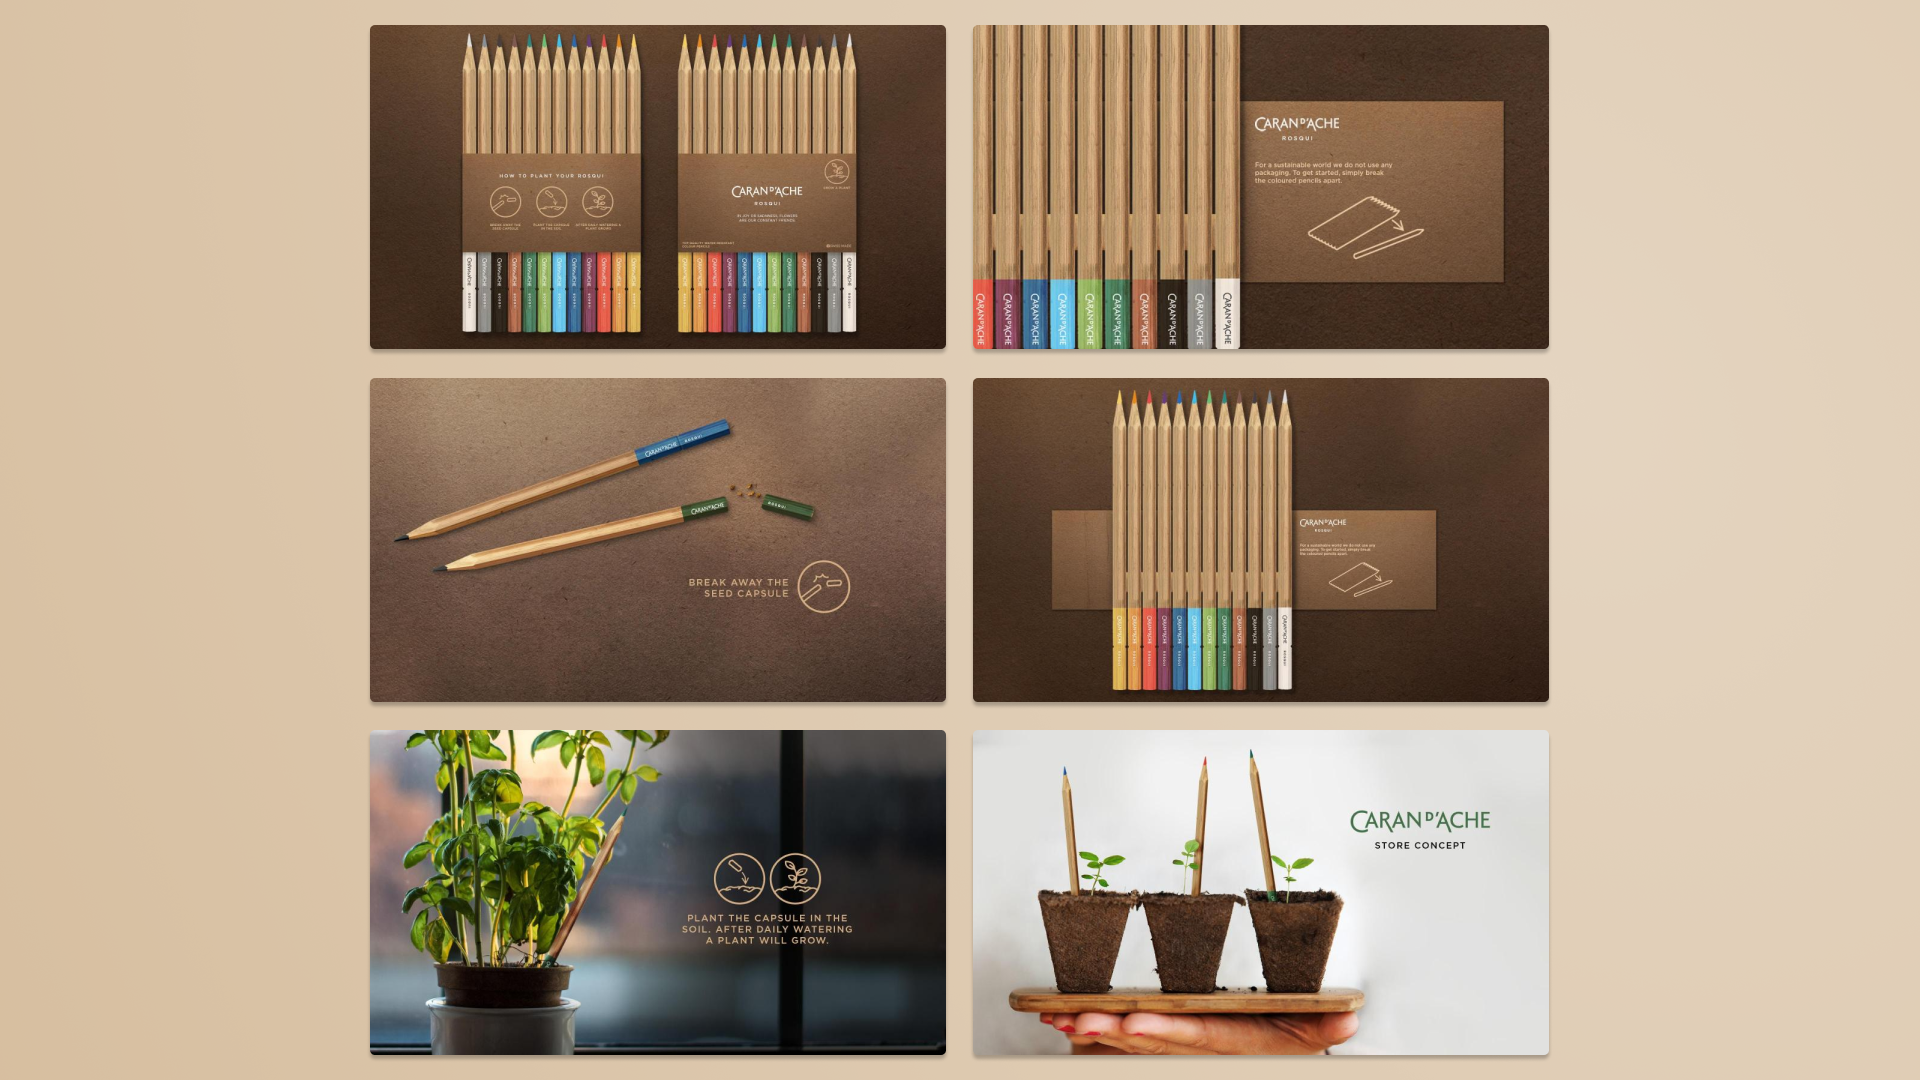 Circular redesign of Caran D'ache pencils Project